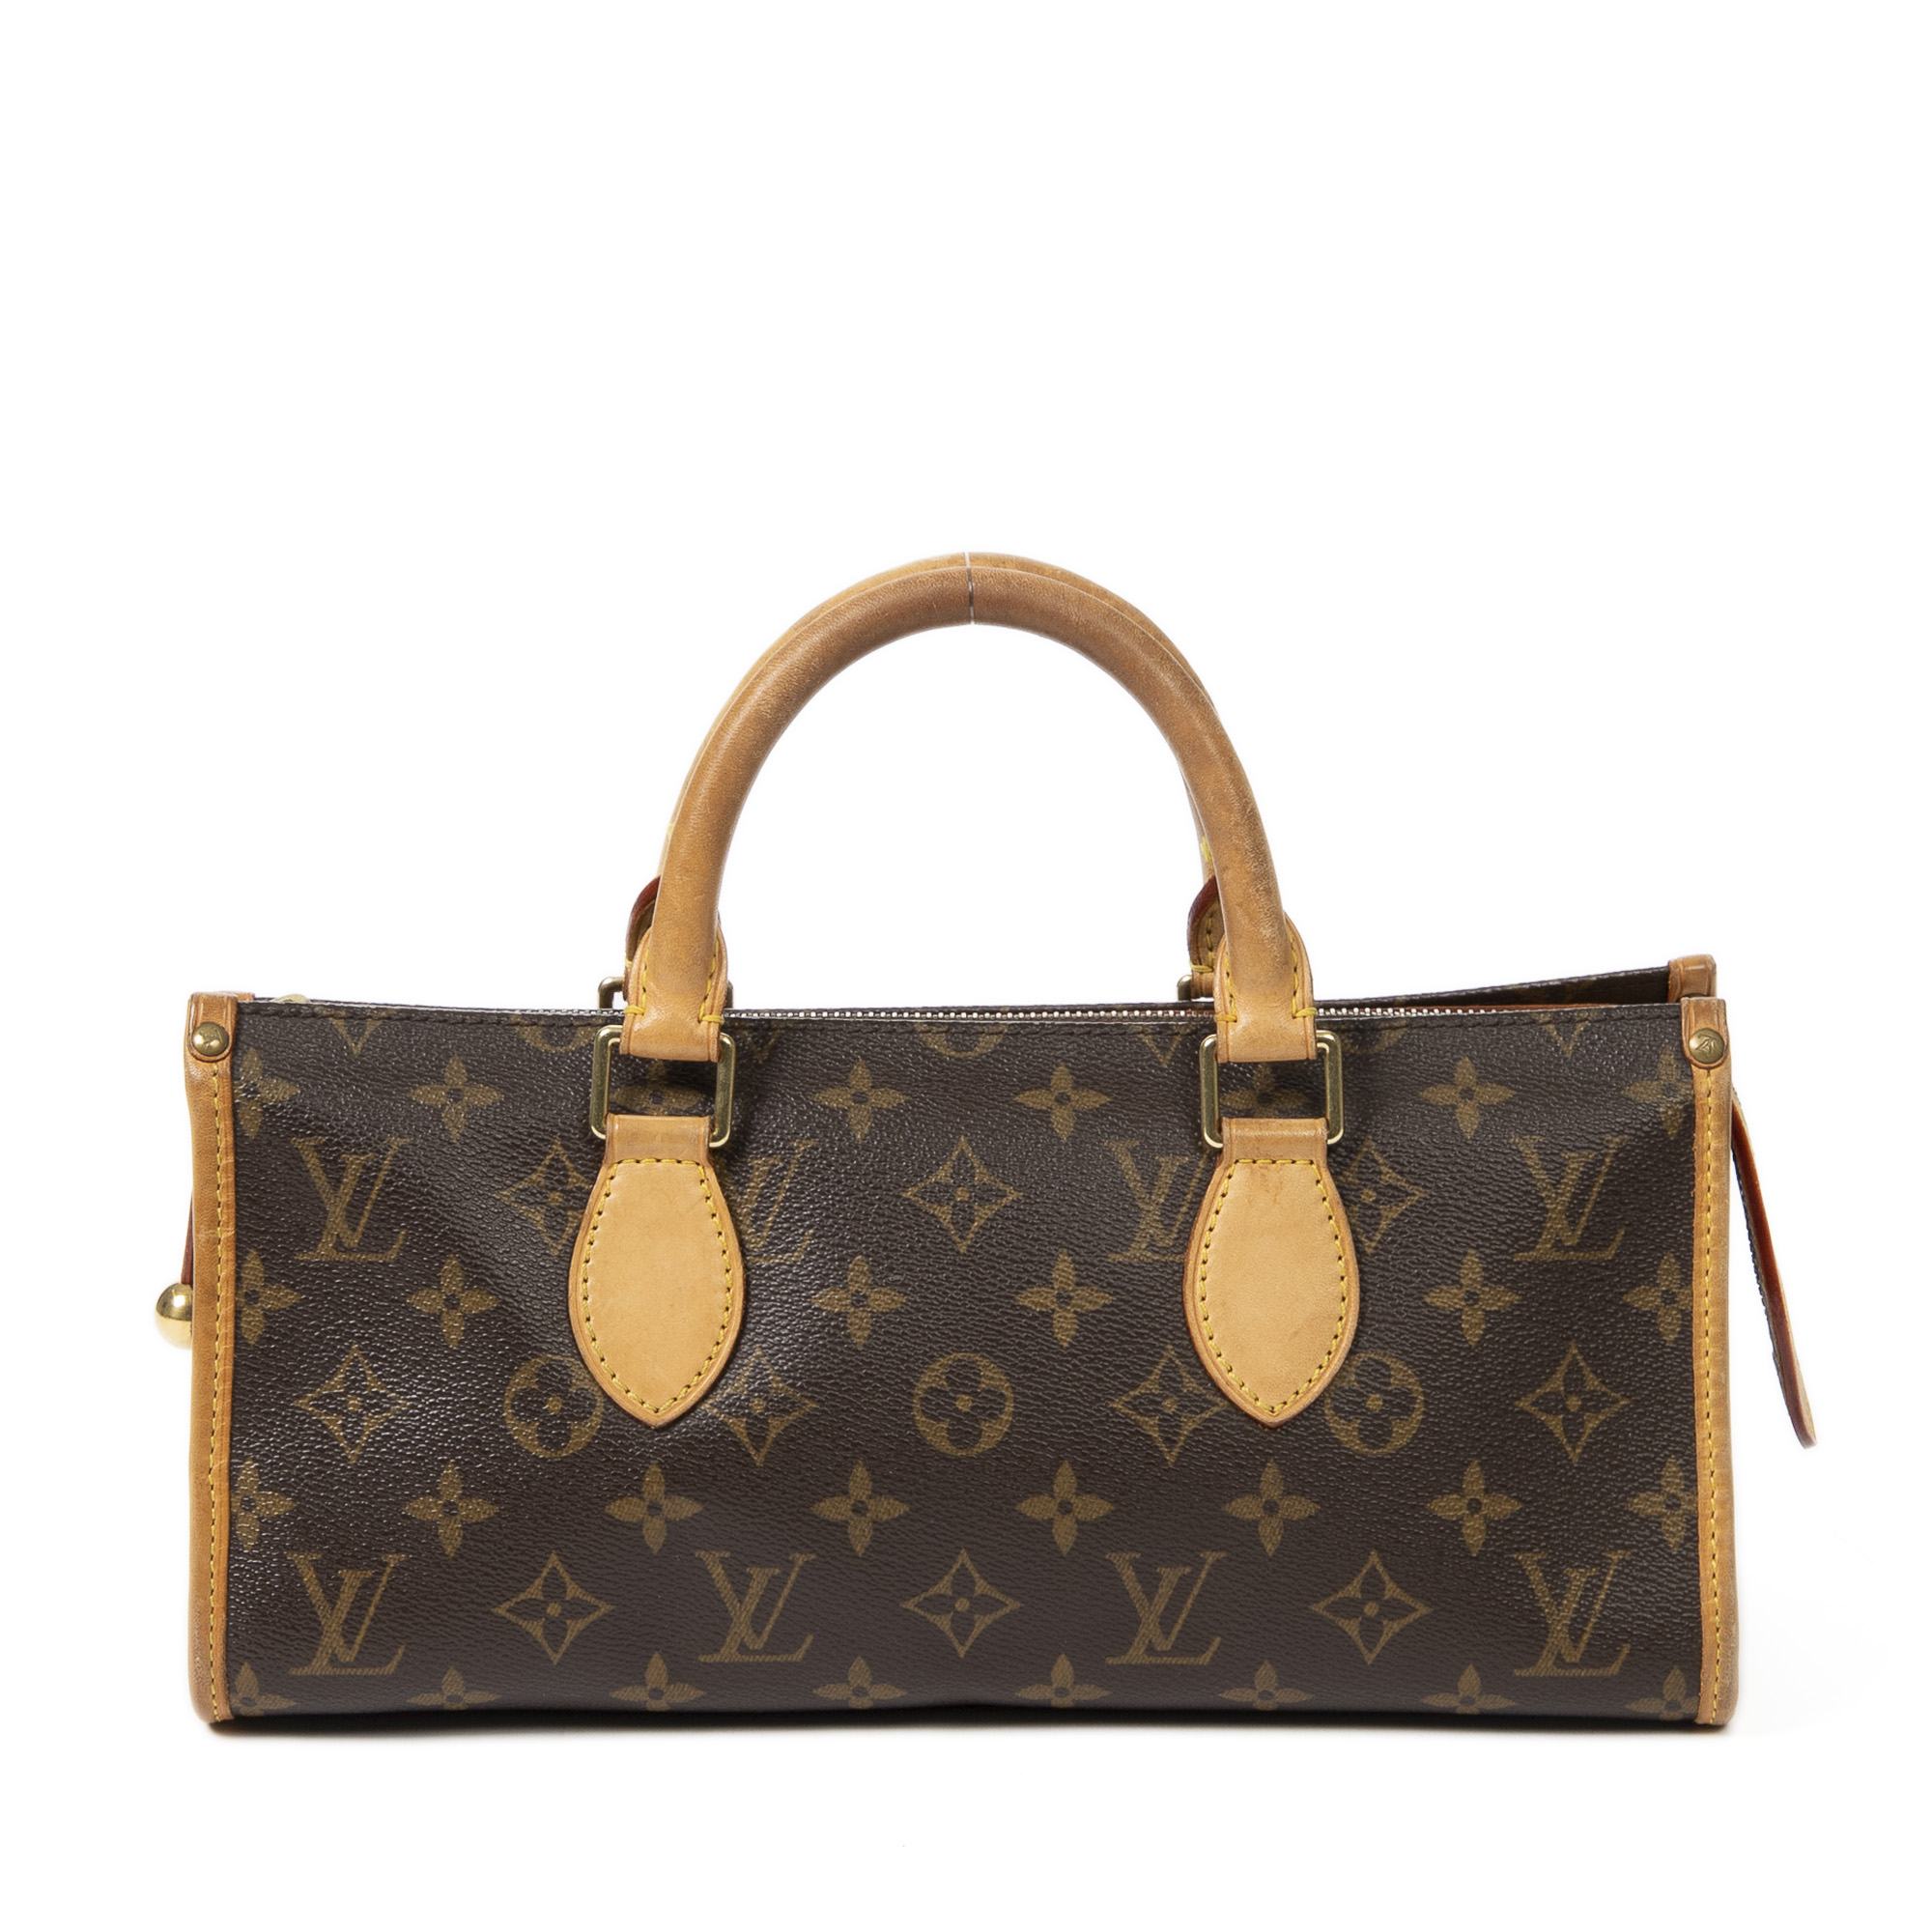 Lot 147 - Louis Vuitton Monogram Popincourt Bag